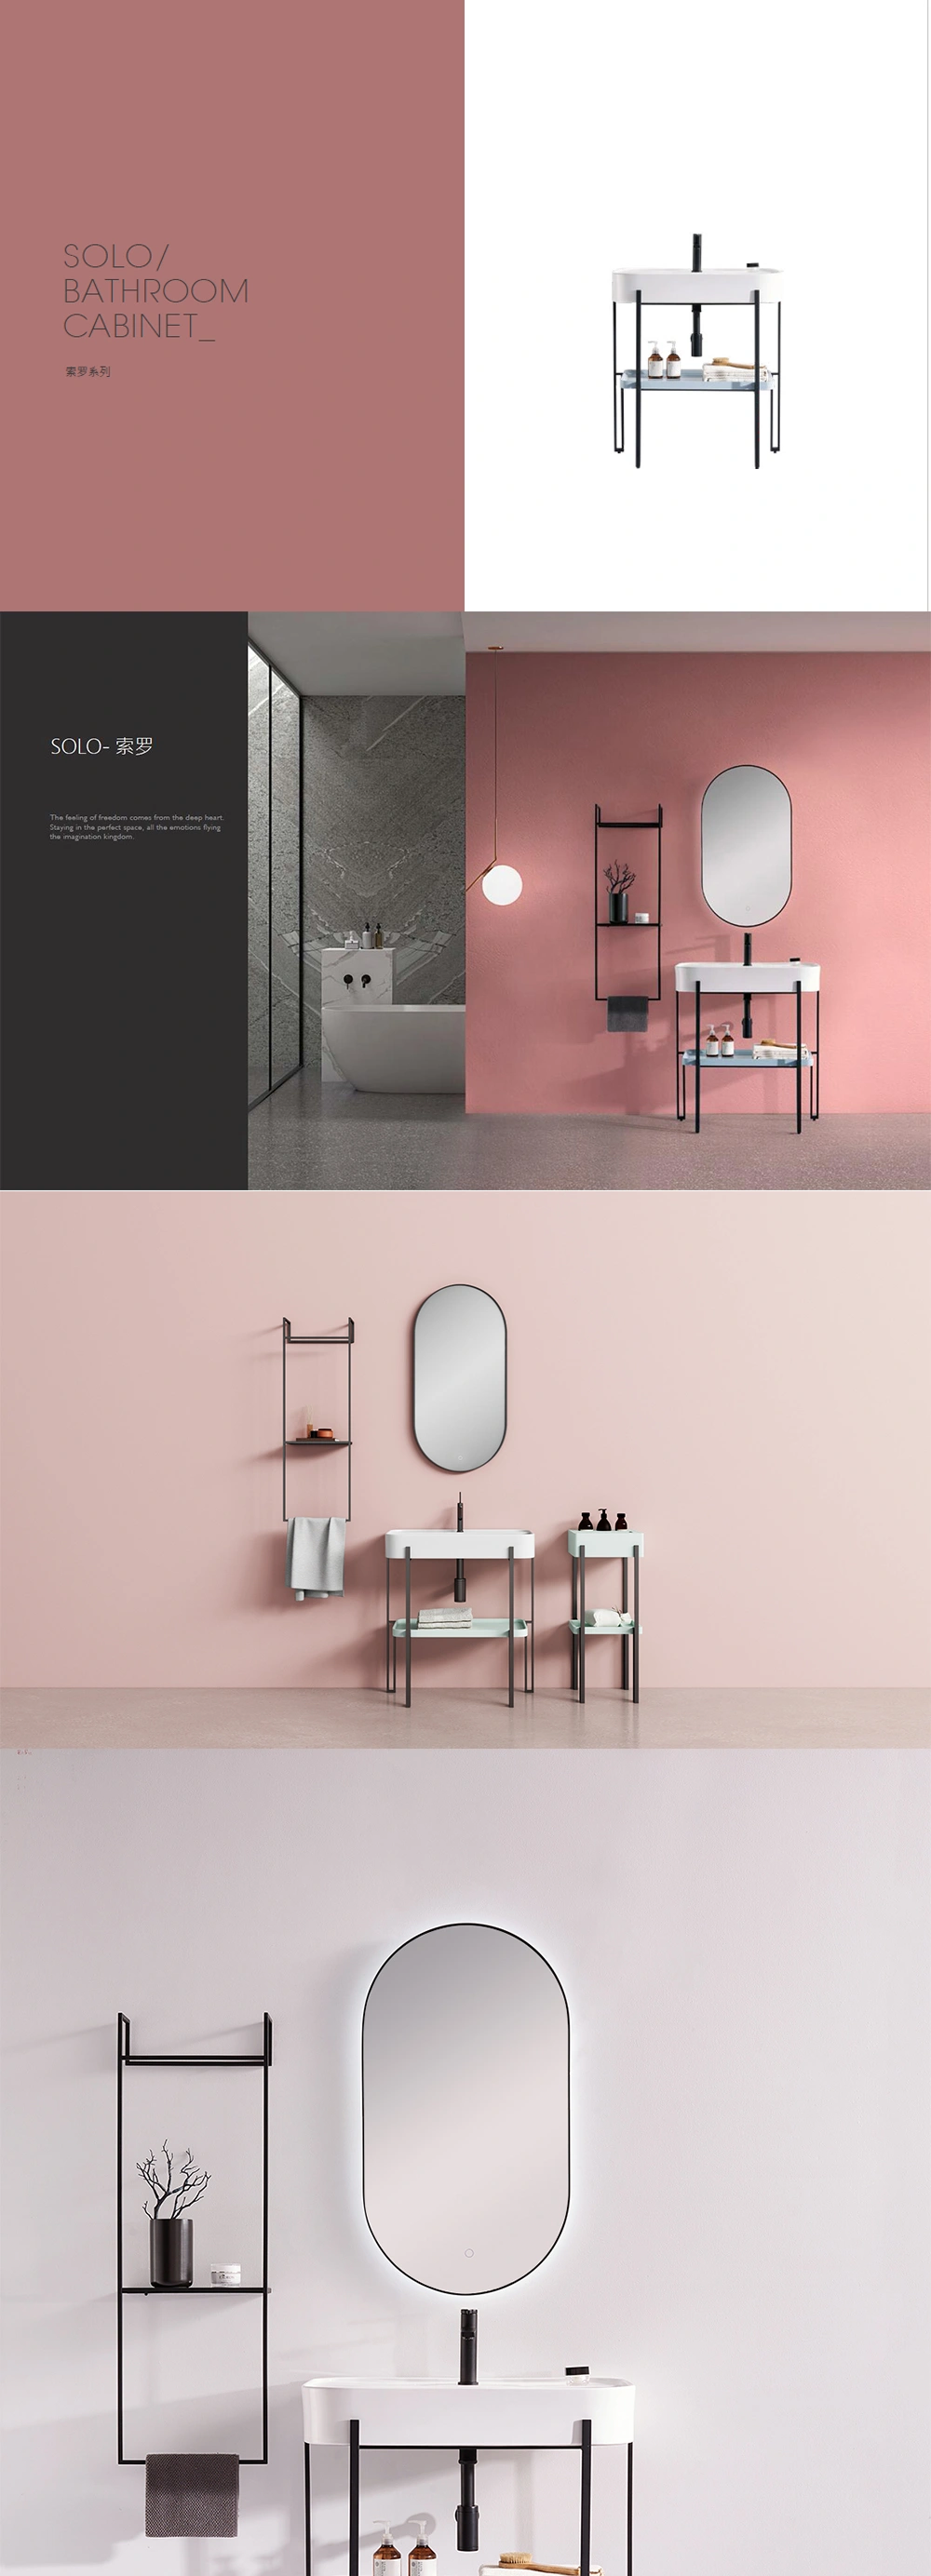 bathroom vanity units